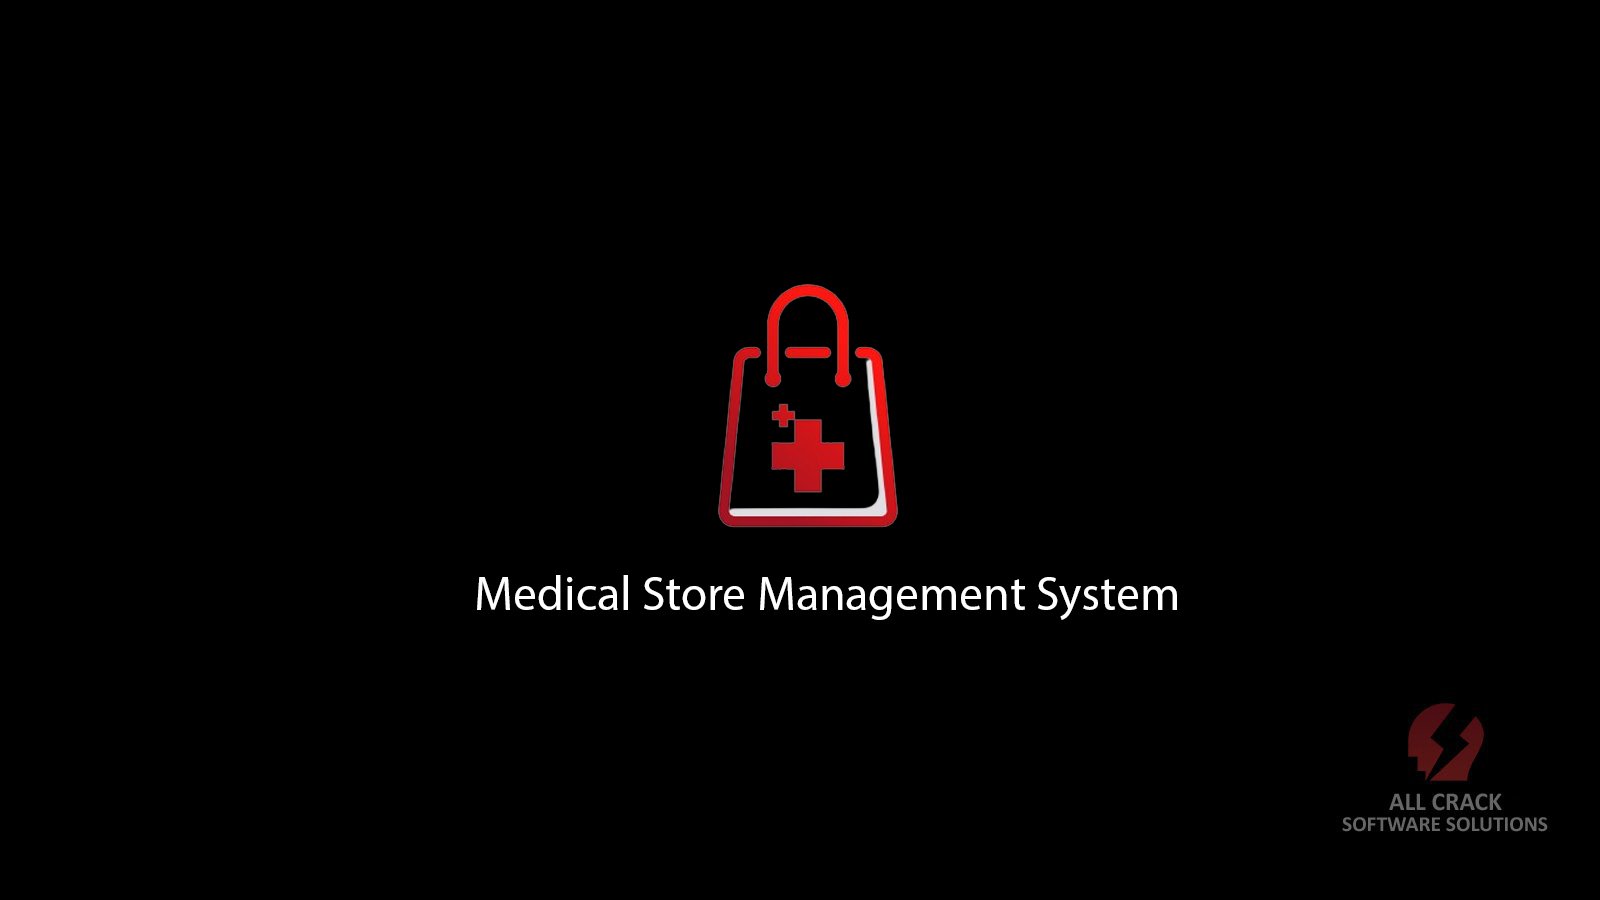 Medical Store Management System Software Download Free